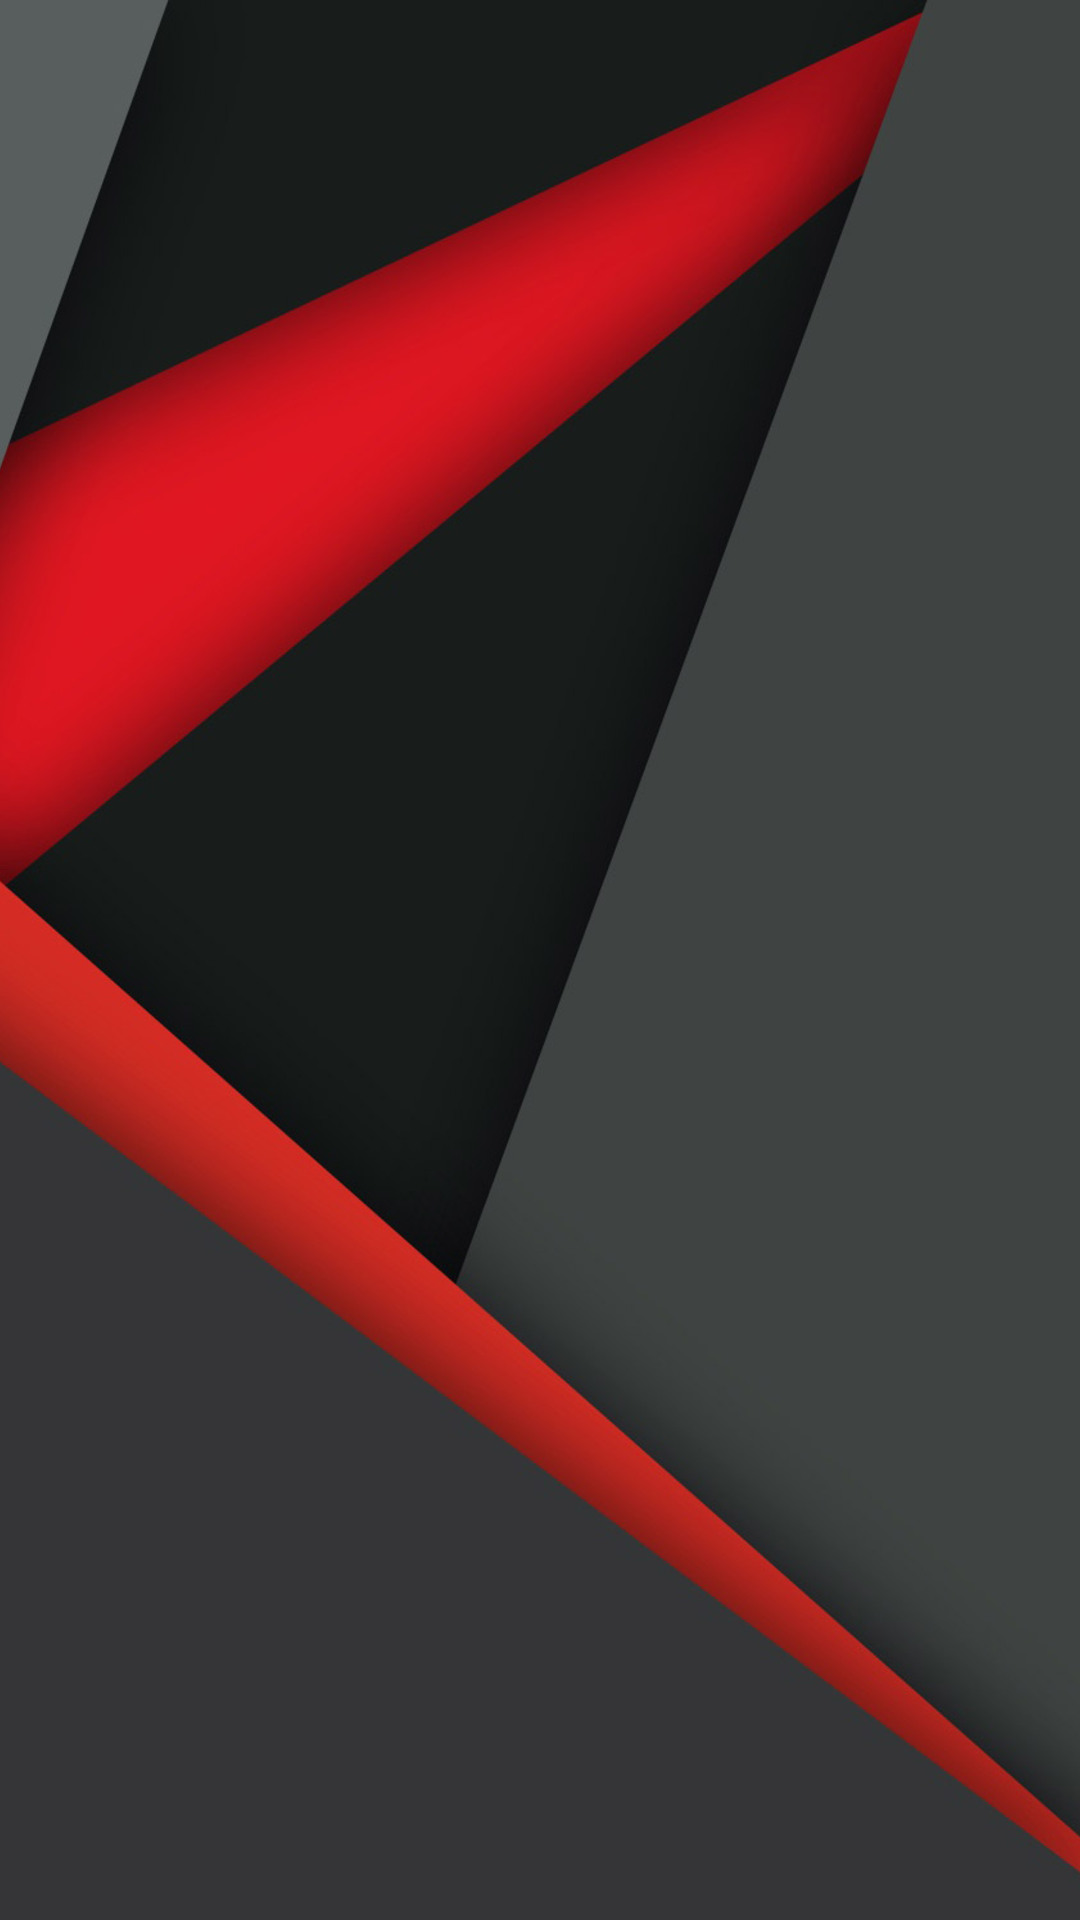 1080x1920 Material Design Dark Red Black Iphone 7,6s,6 ...